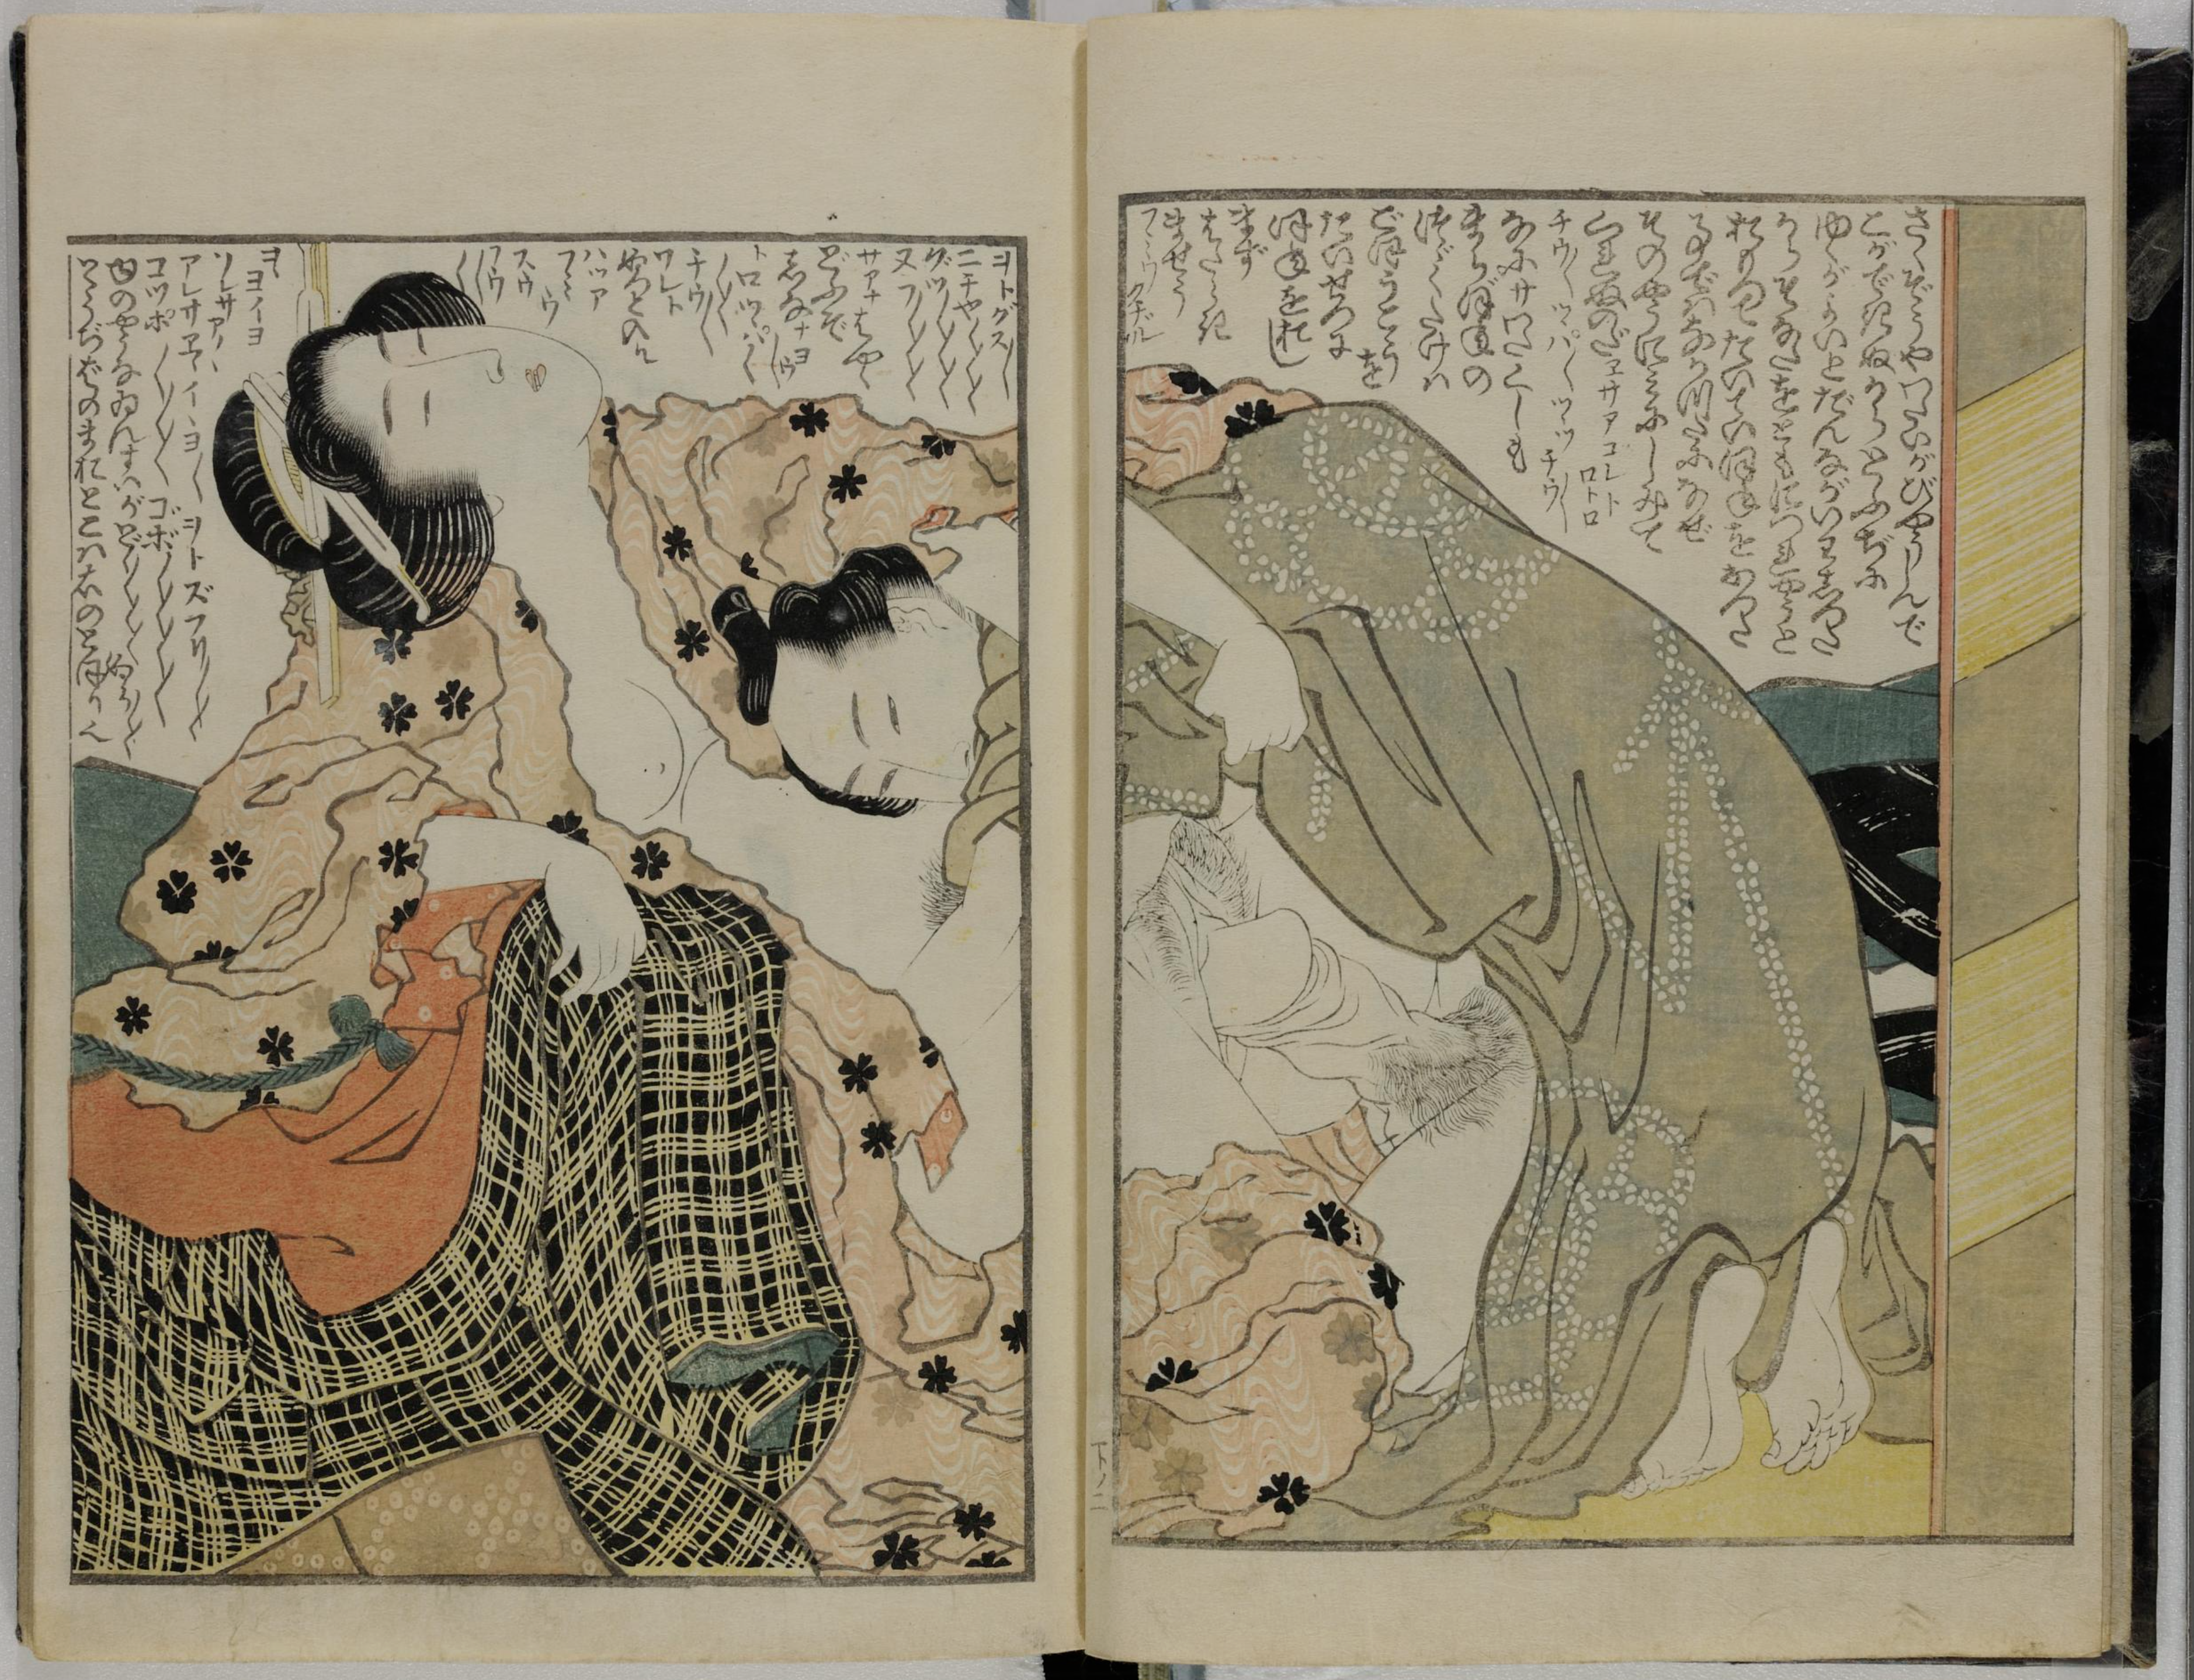 Katsushika Hokusai, Untitled, Kinoe no Komatsu (Volume 3), ink and color on paper, ca. 1814. Photo: Public Domain.